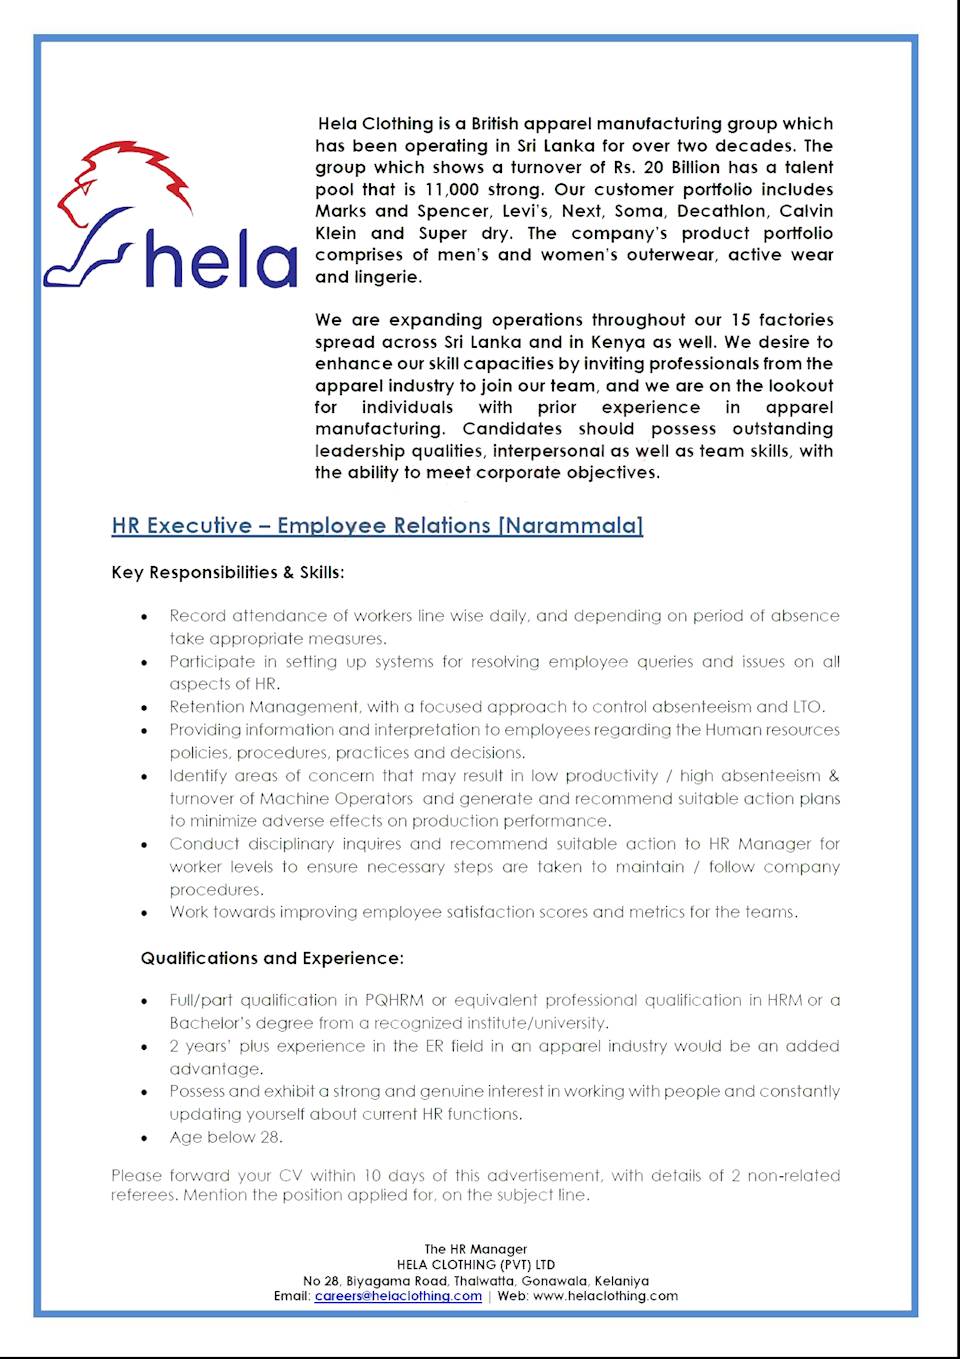 Hr Executive - Employee Relations (Narammala) At Hela Clothing